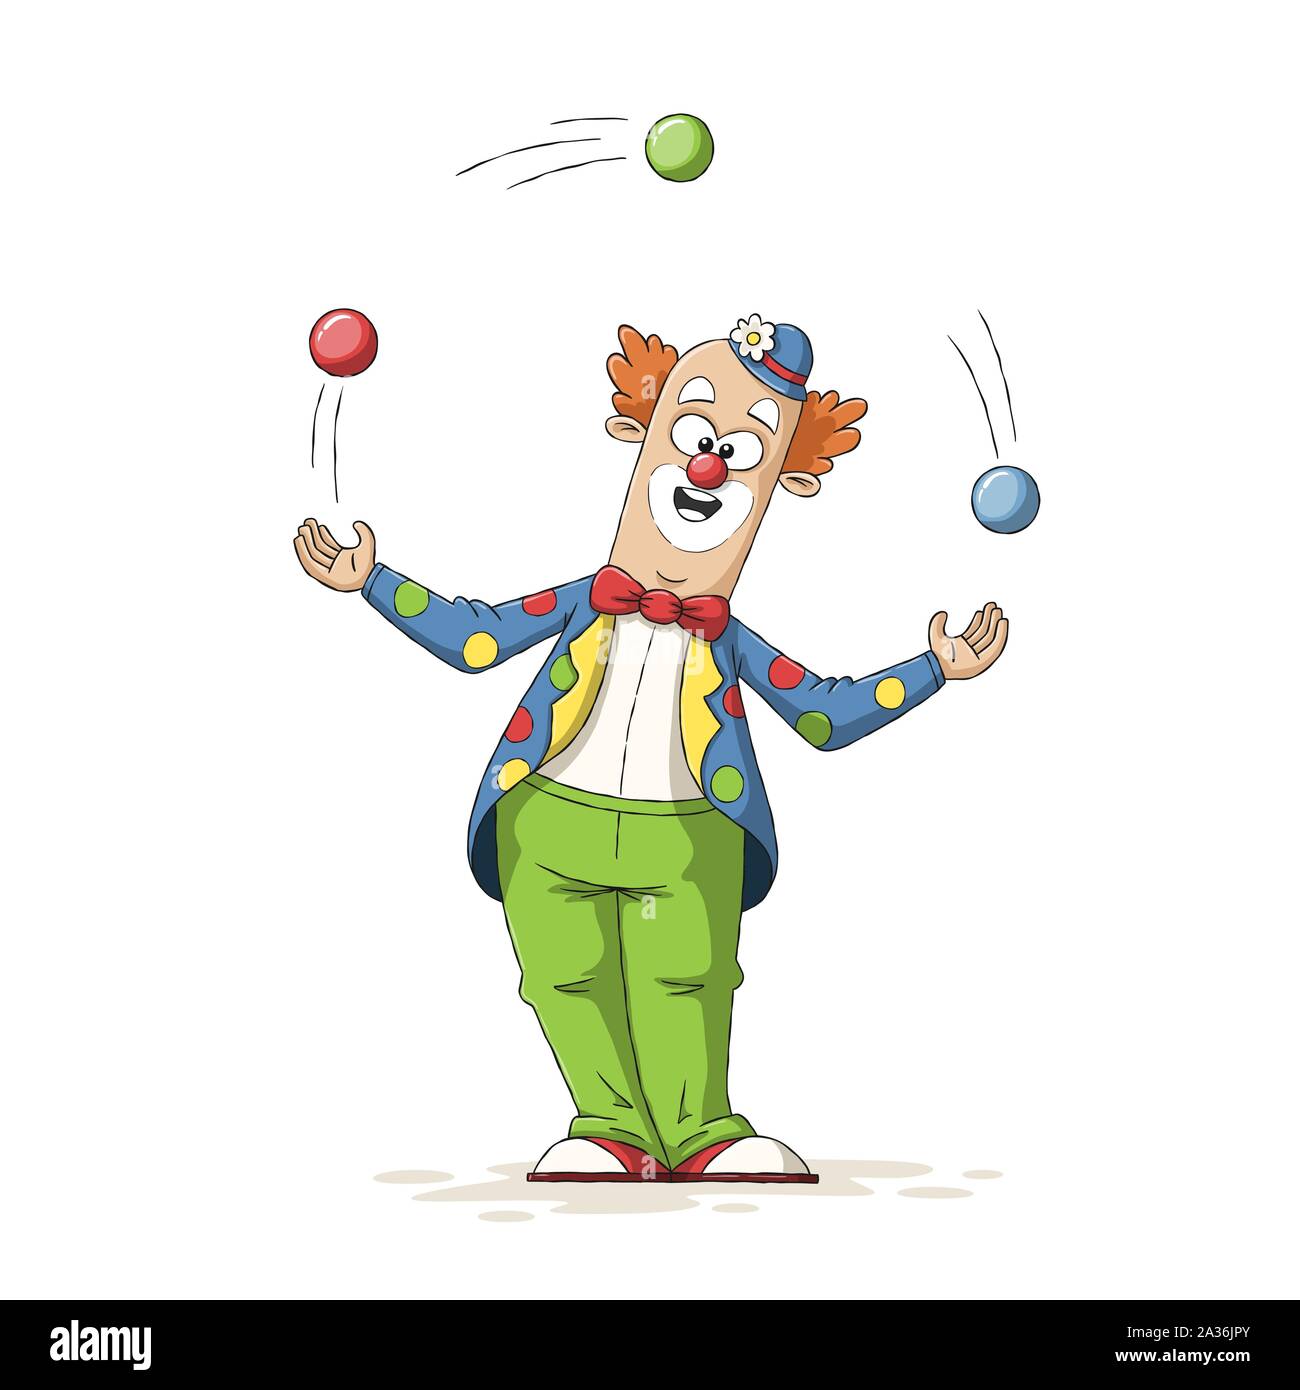 Funny cartoon clown. Hand drawn vector illustration avec des calques distincts. Illustration de Vecteur